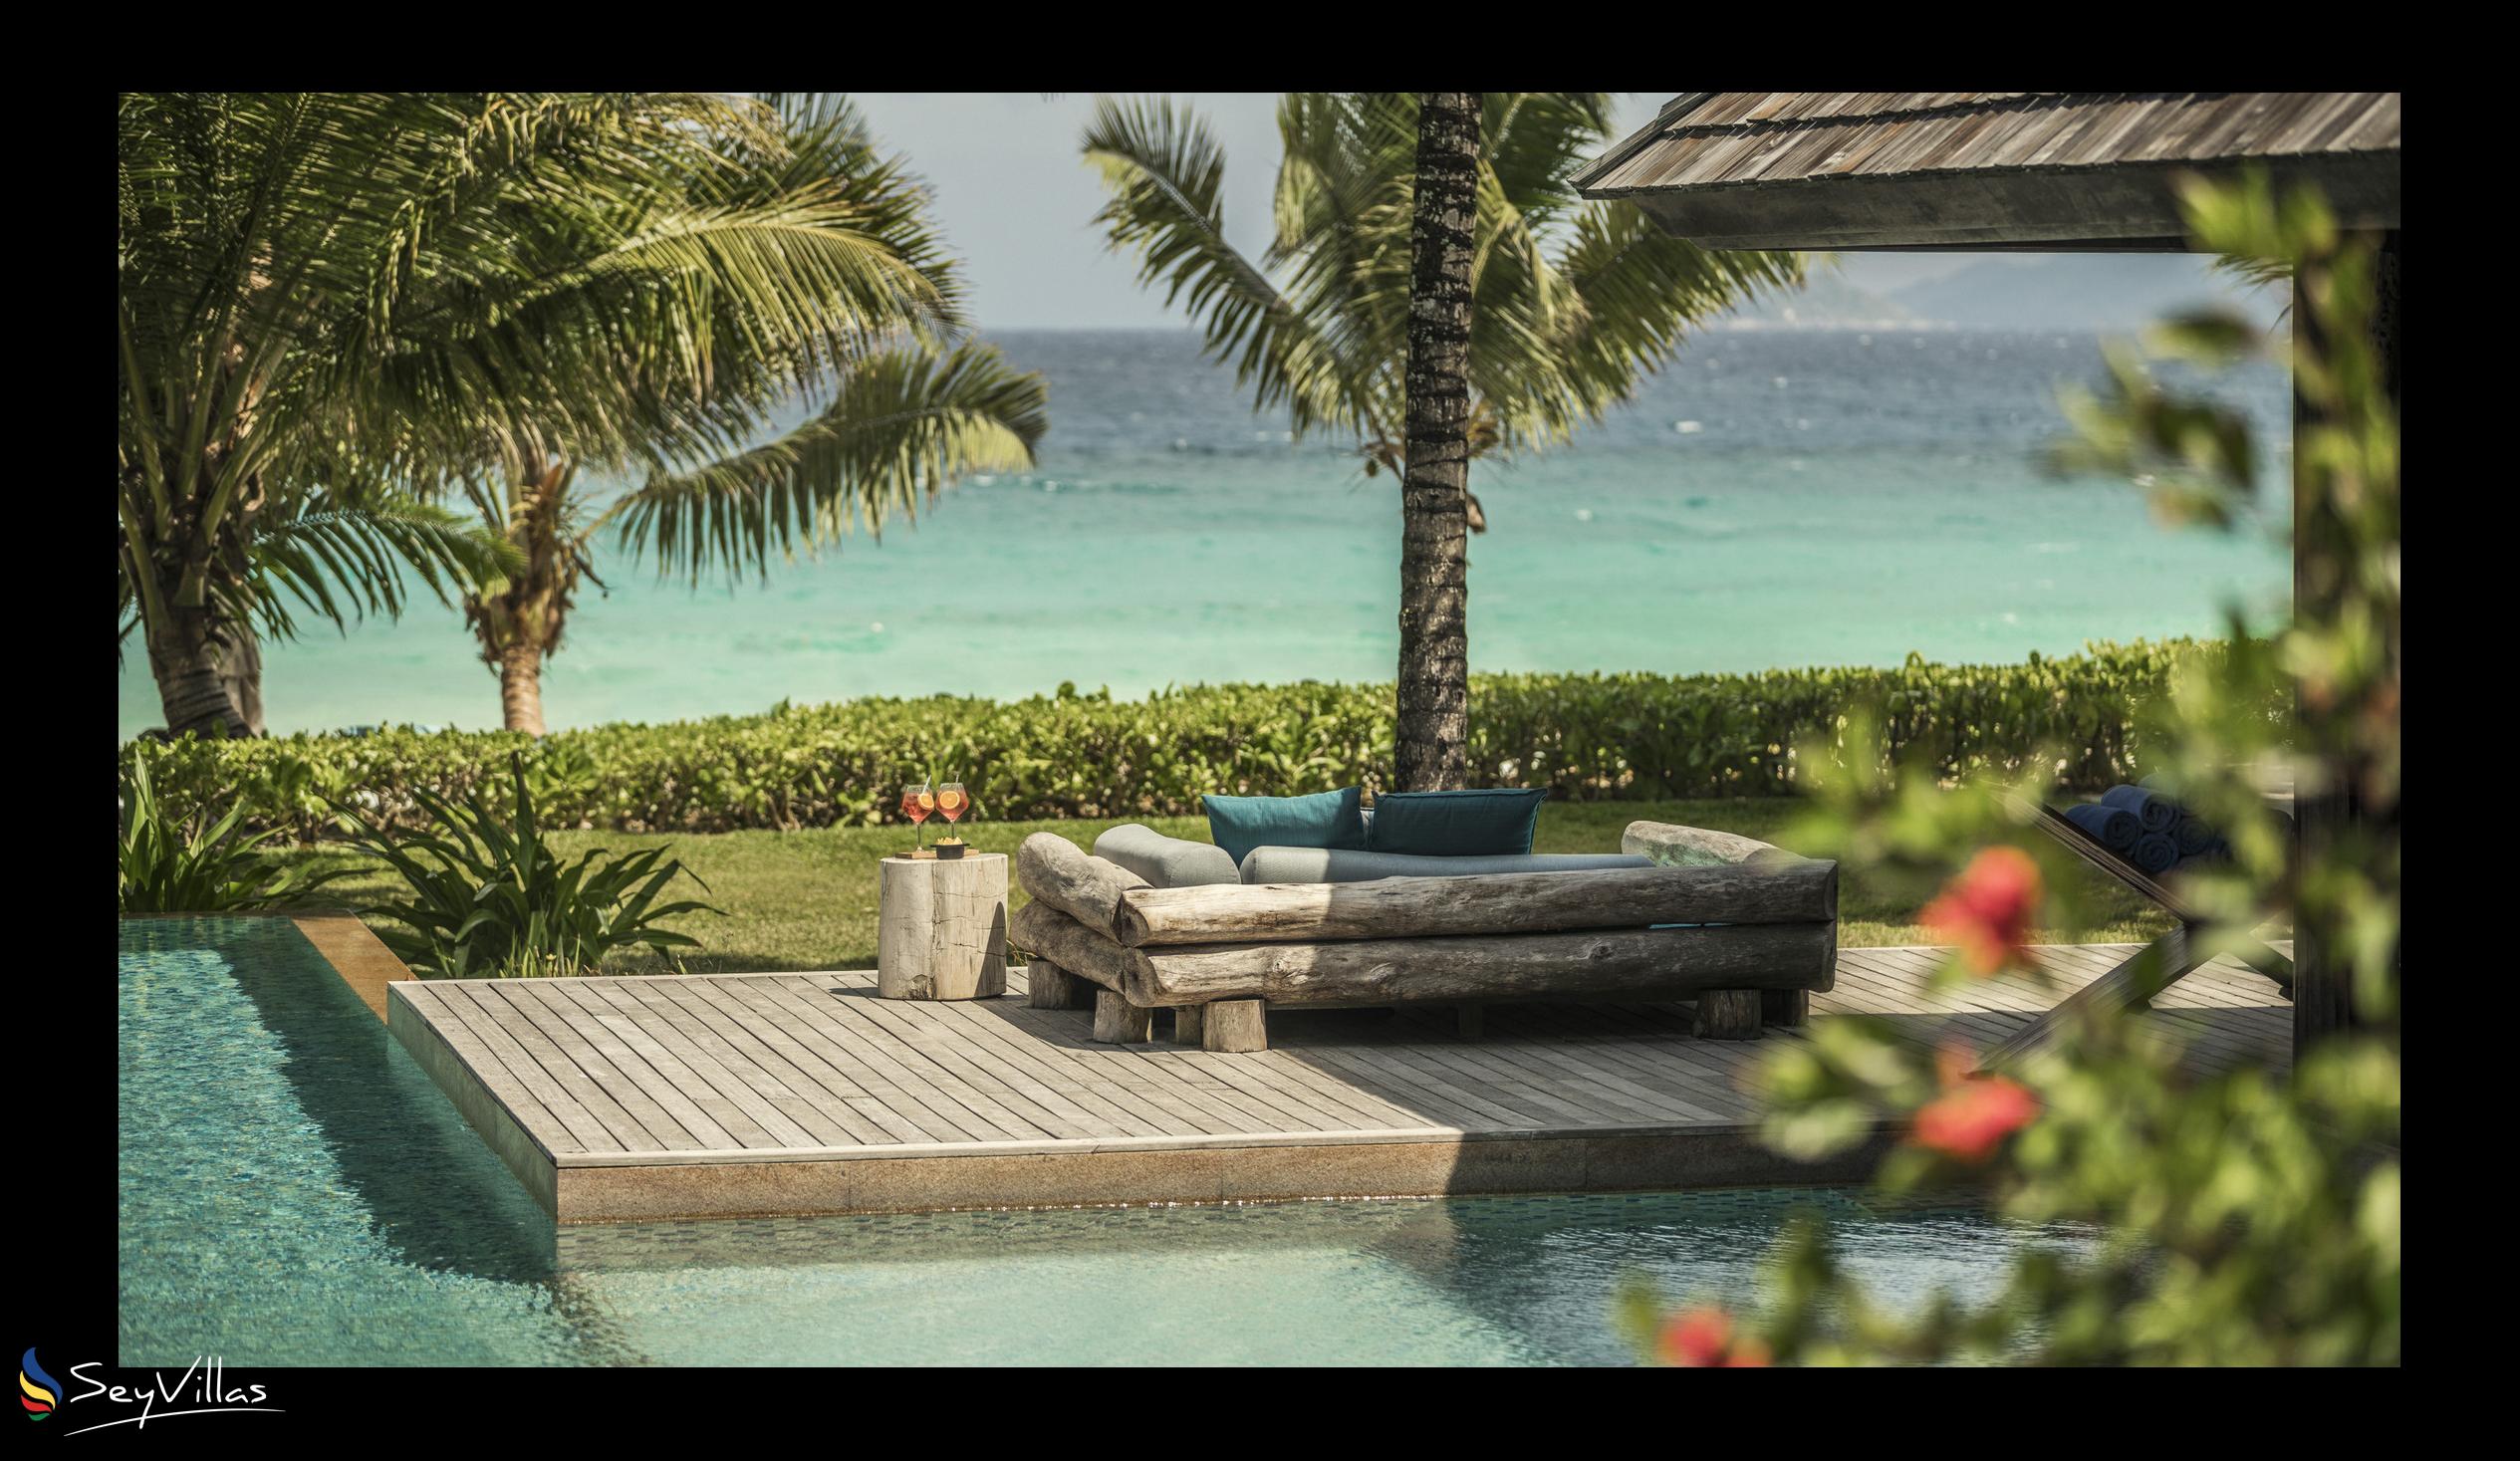 Photo 6: Four Seasons Resort - Outdoor area - Mahé (Seychelles)